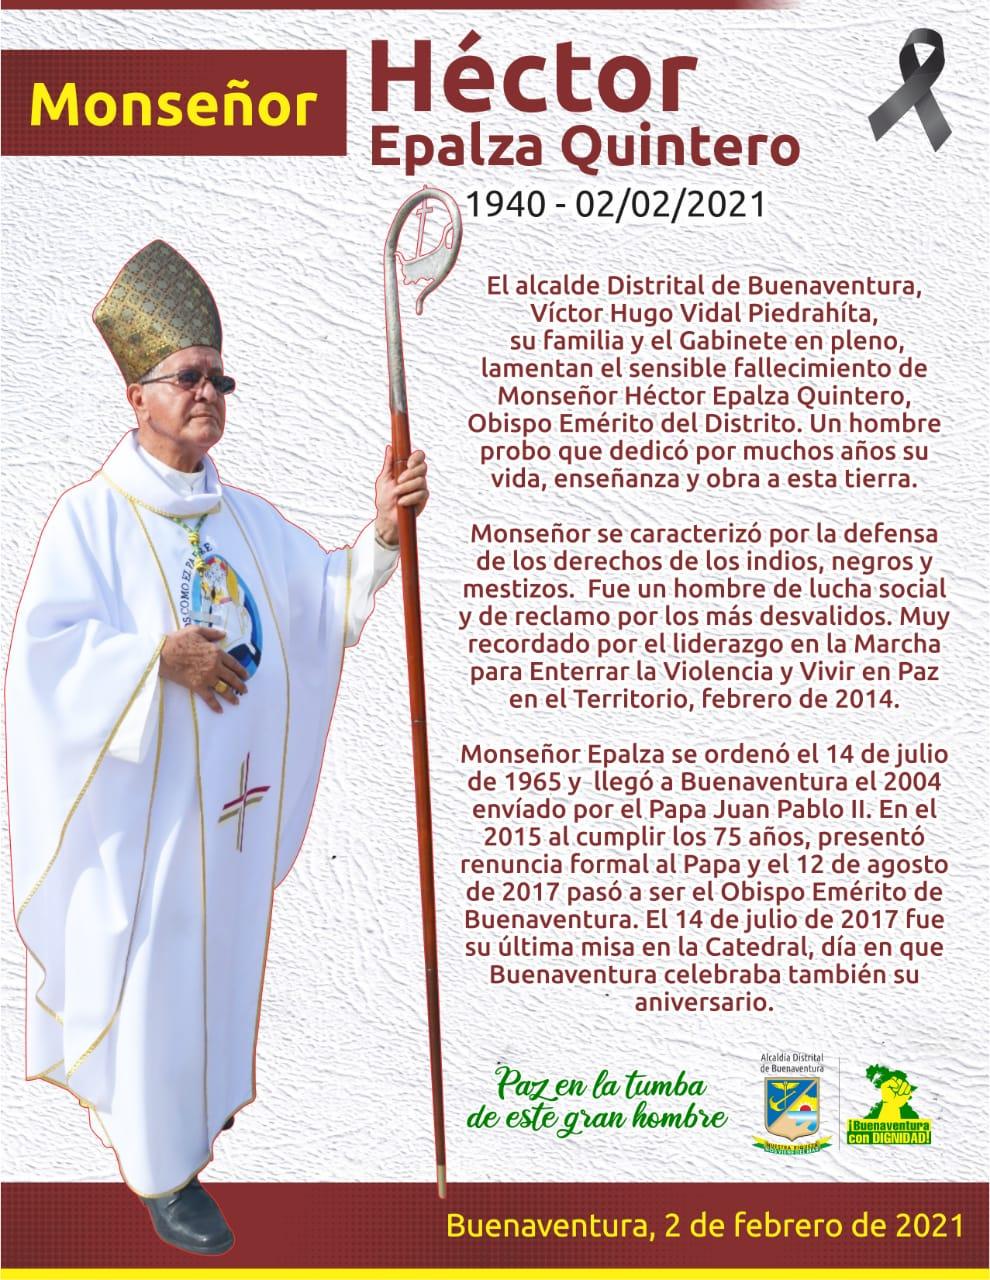 Monseñor Hector